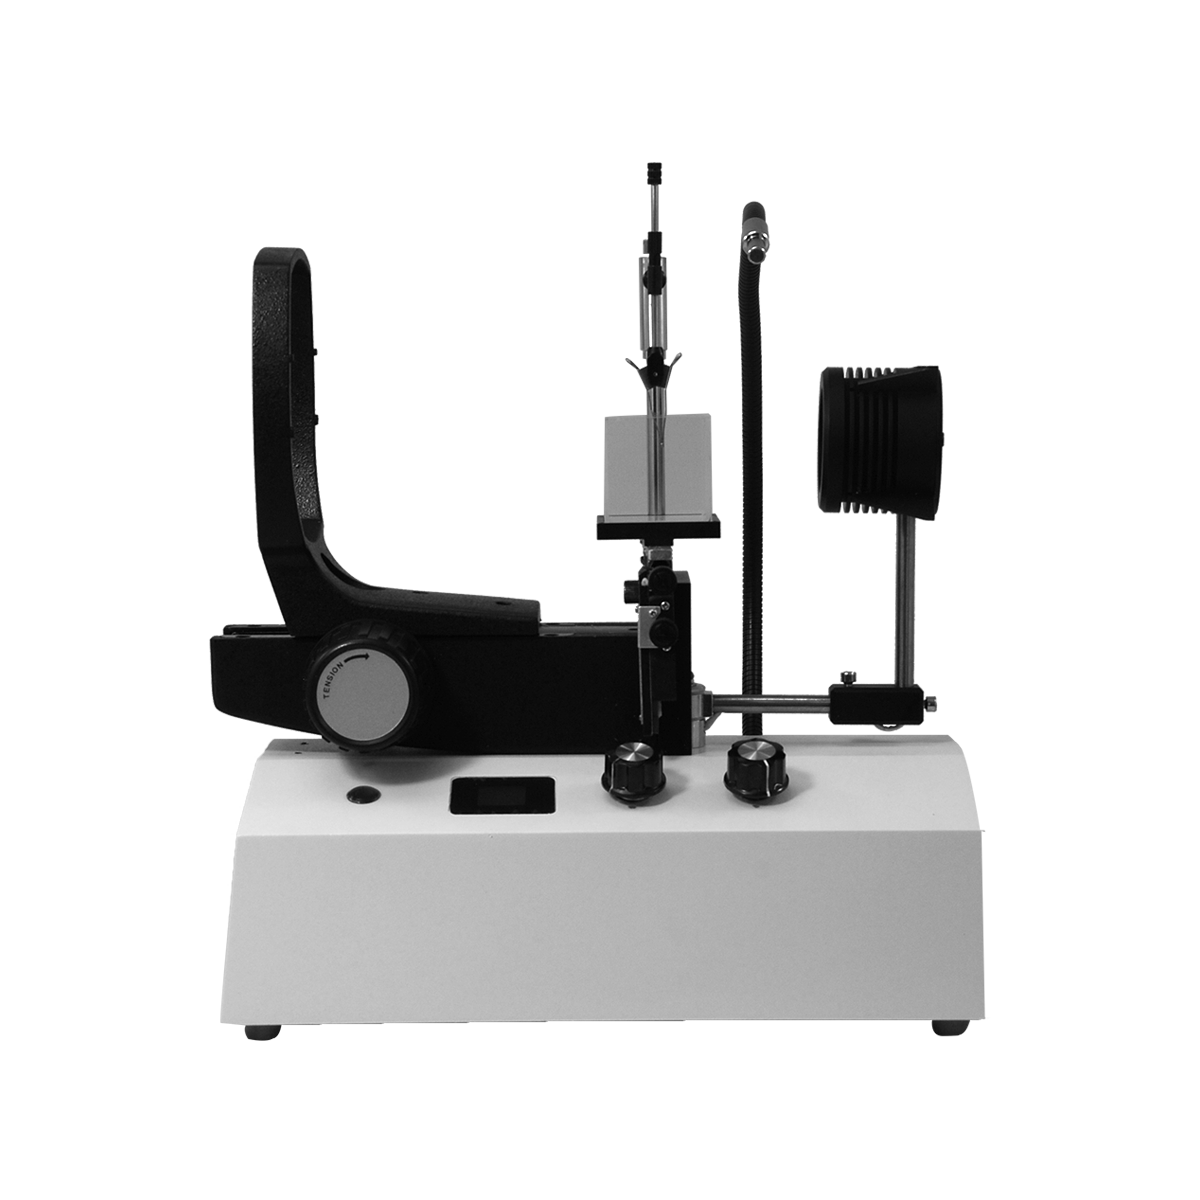 Microscope Stand